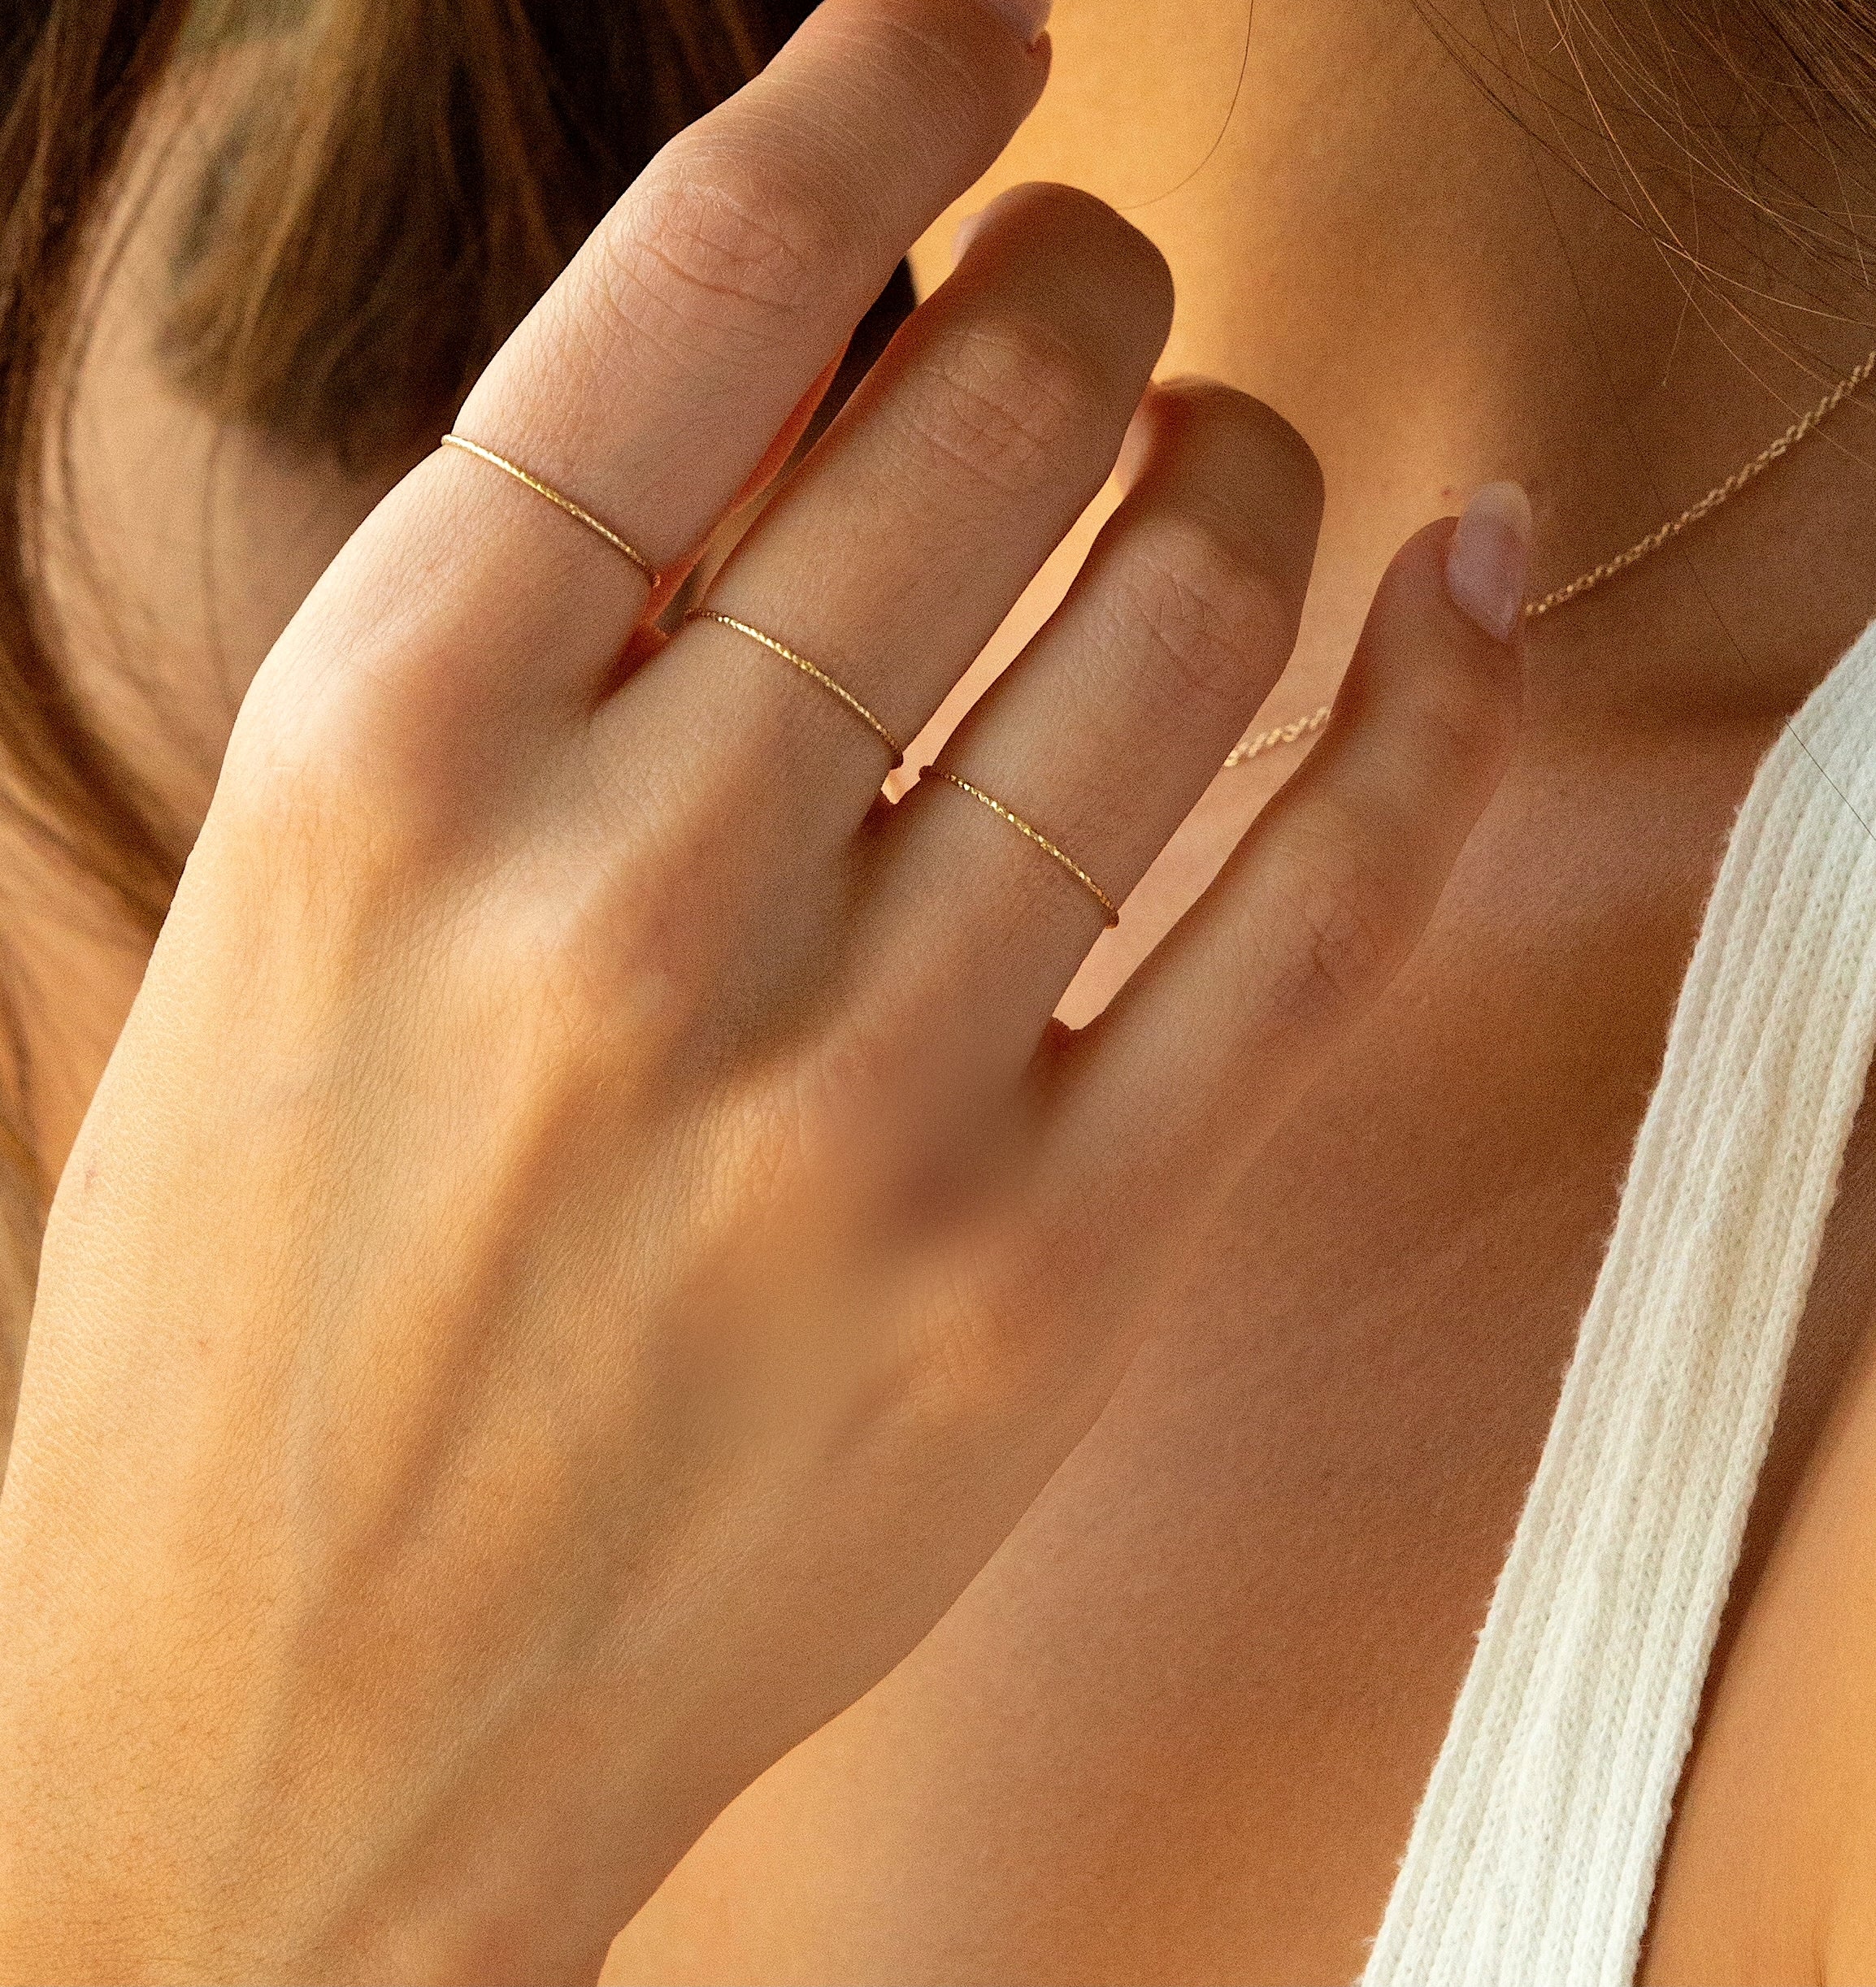 Buy Thin Gold Ring, Gold Stacking Ring, 14k Gold Filled Ring, Gold Ring,  Dainty Gold Ring, Stacking Ring, Skinny Gold Ring, Gold Stack Ring Online  in India - Etsy